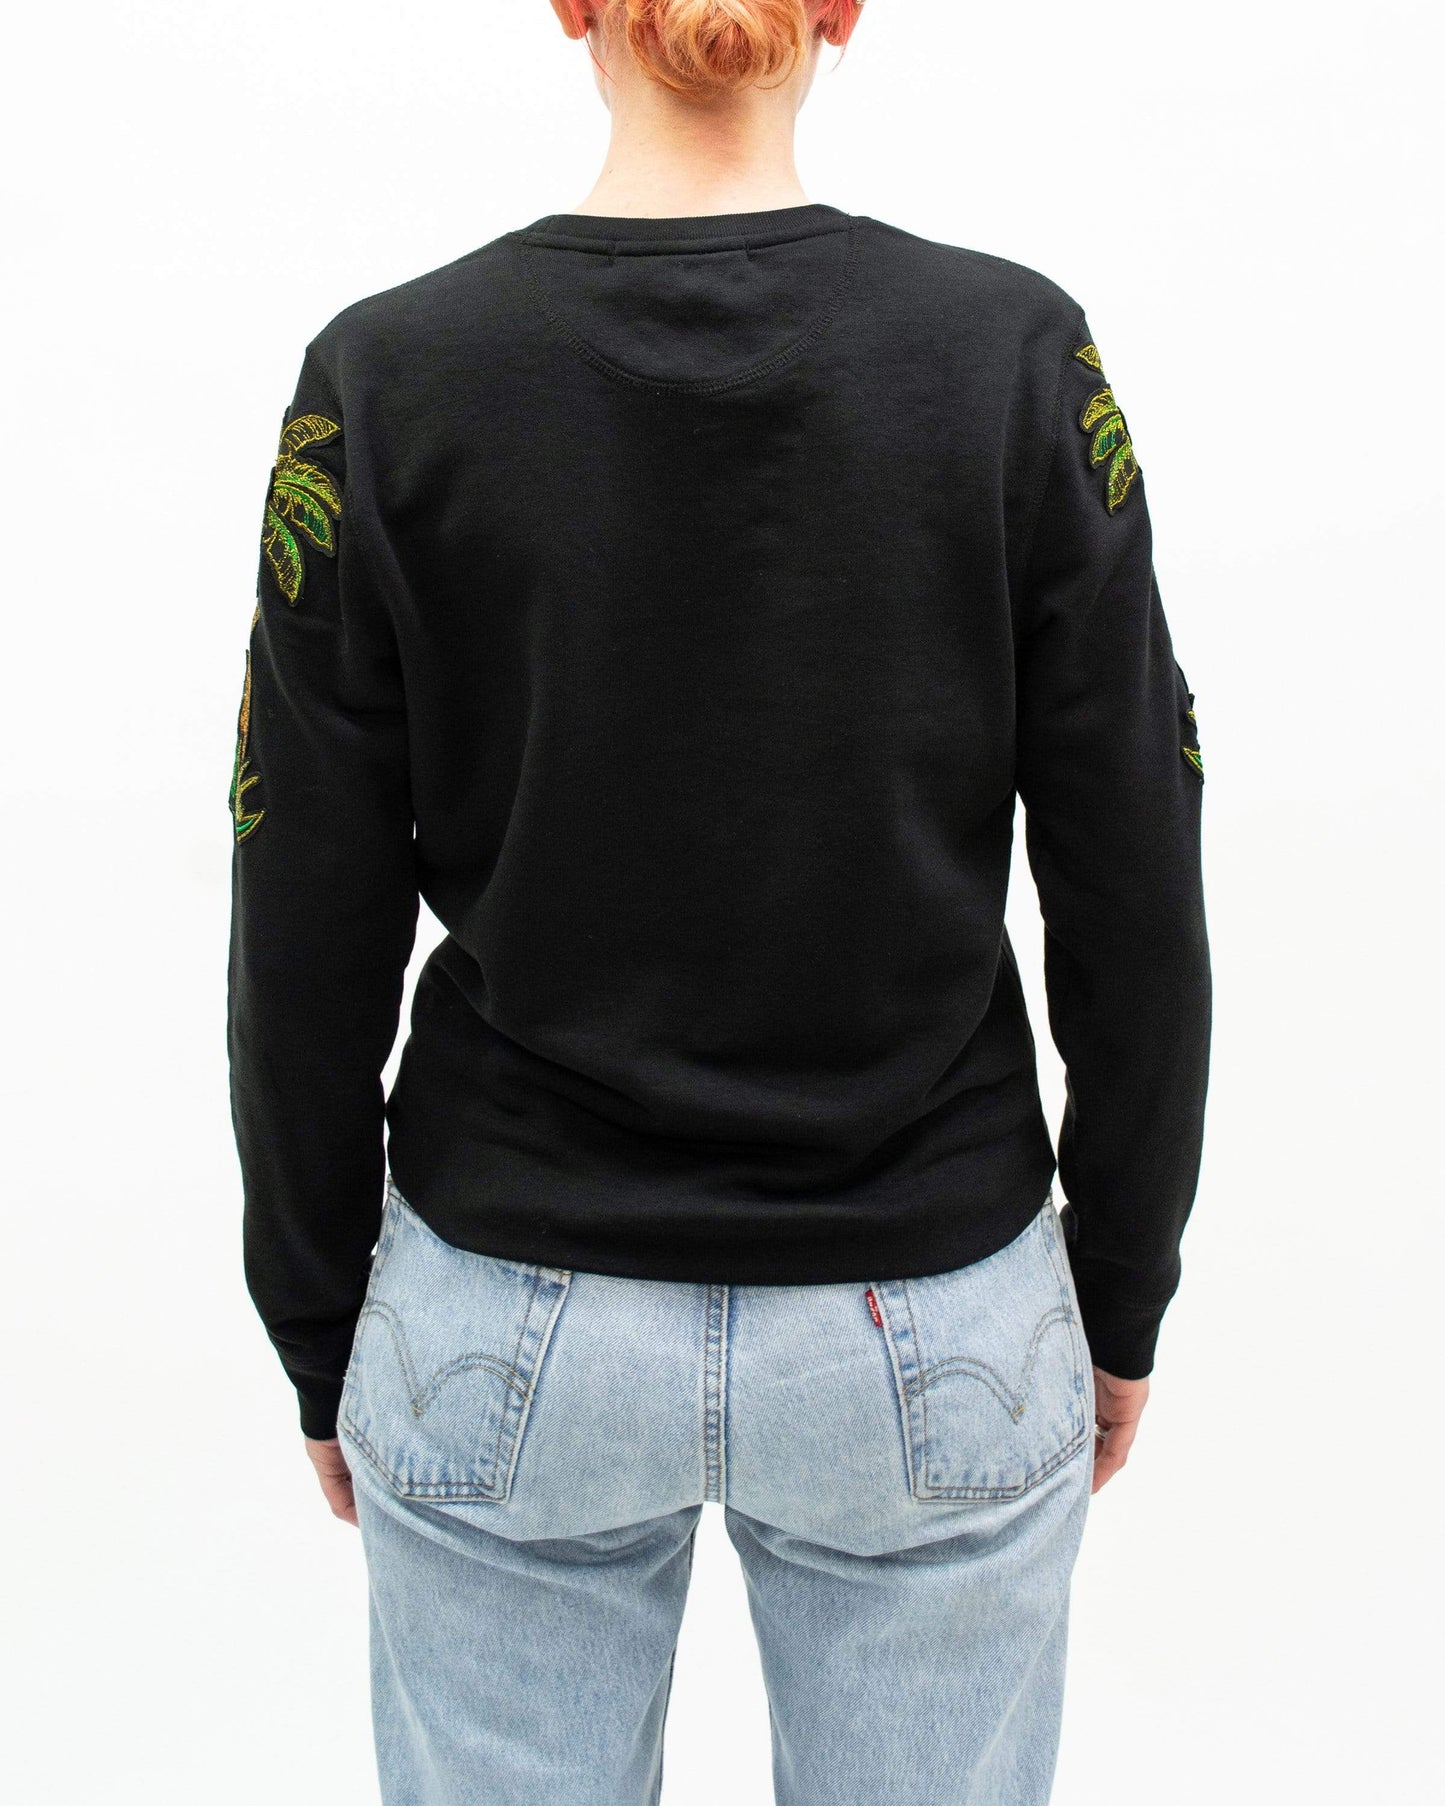 Palm Tree Sweatshirt Black